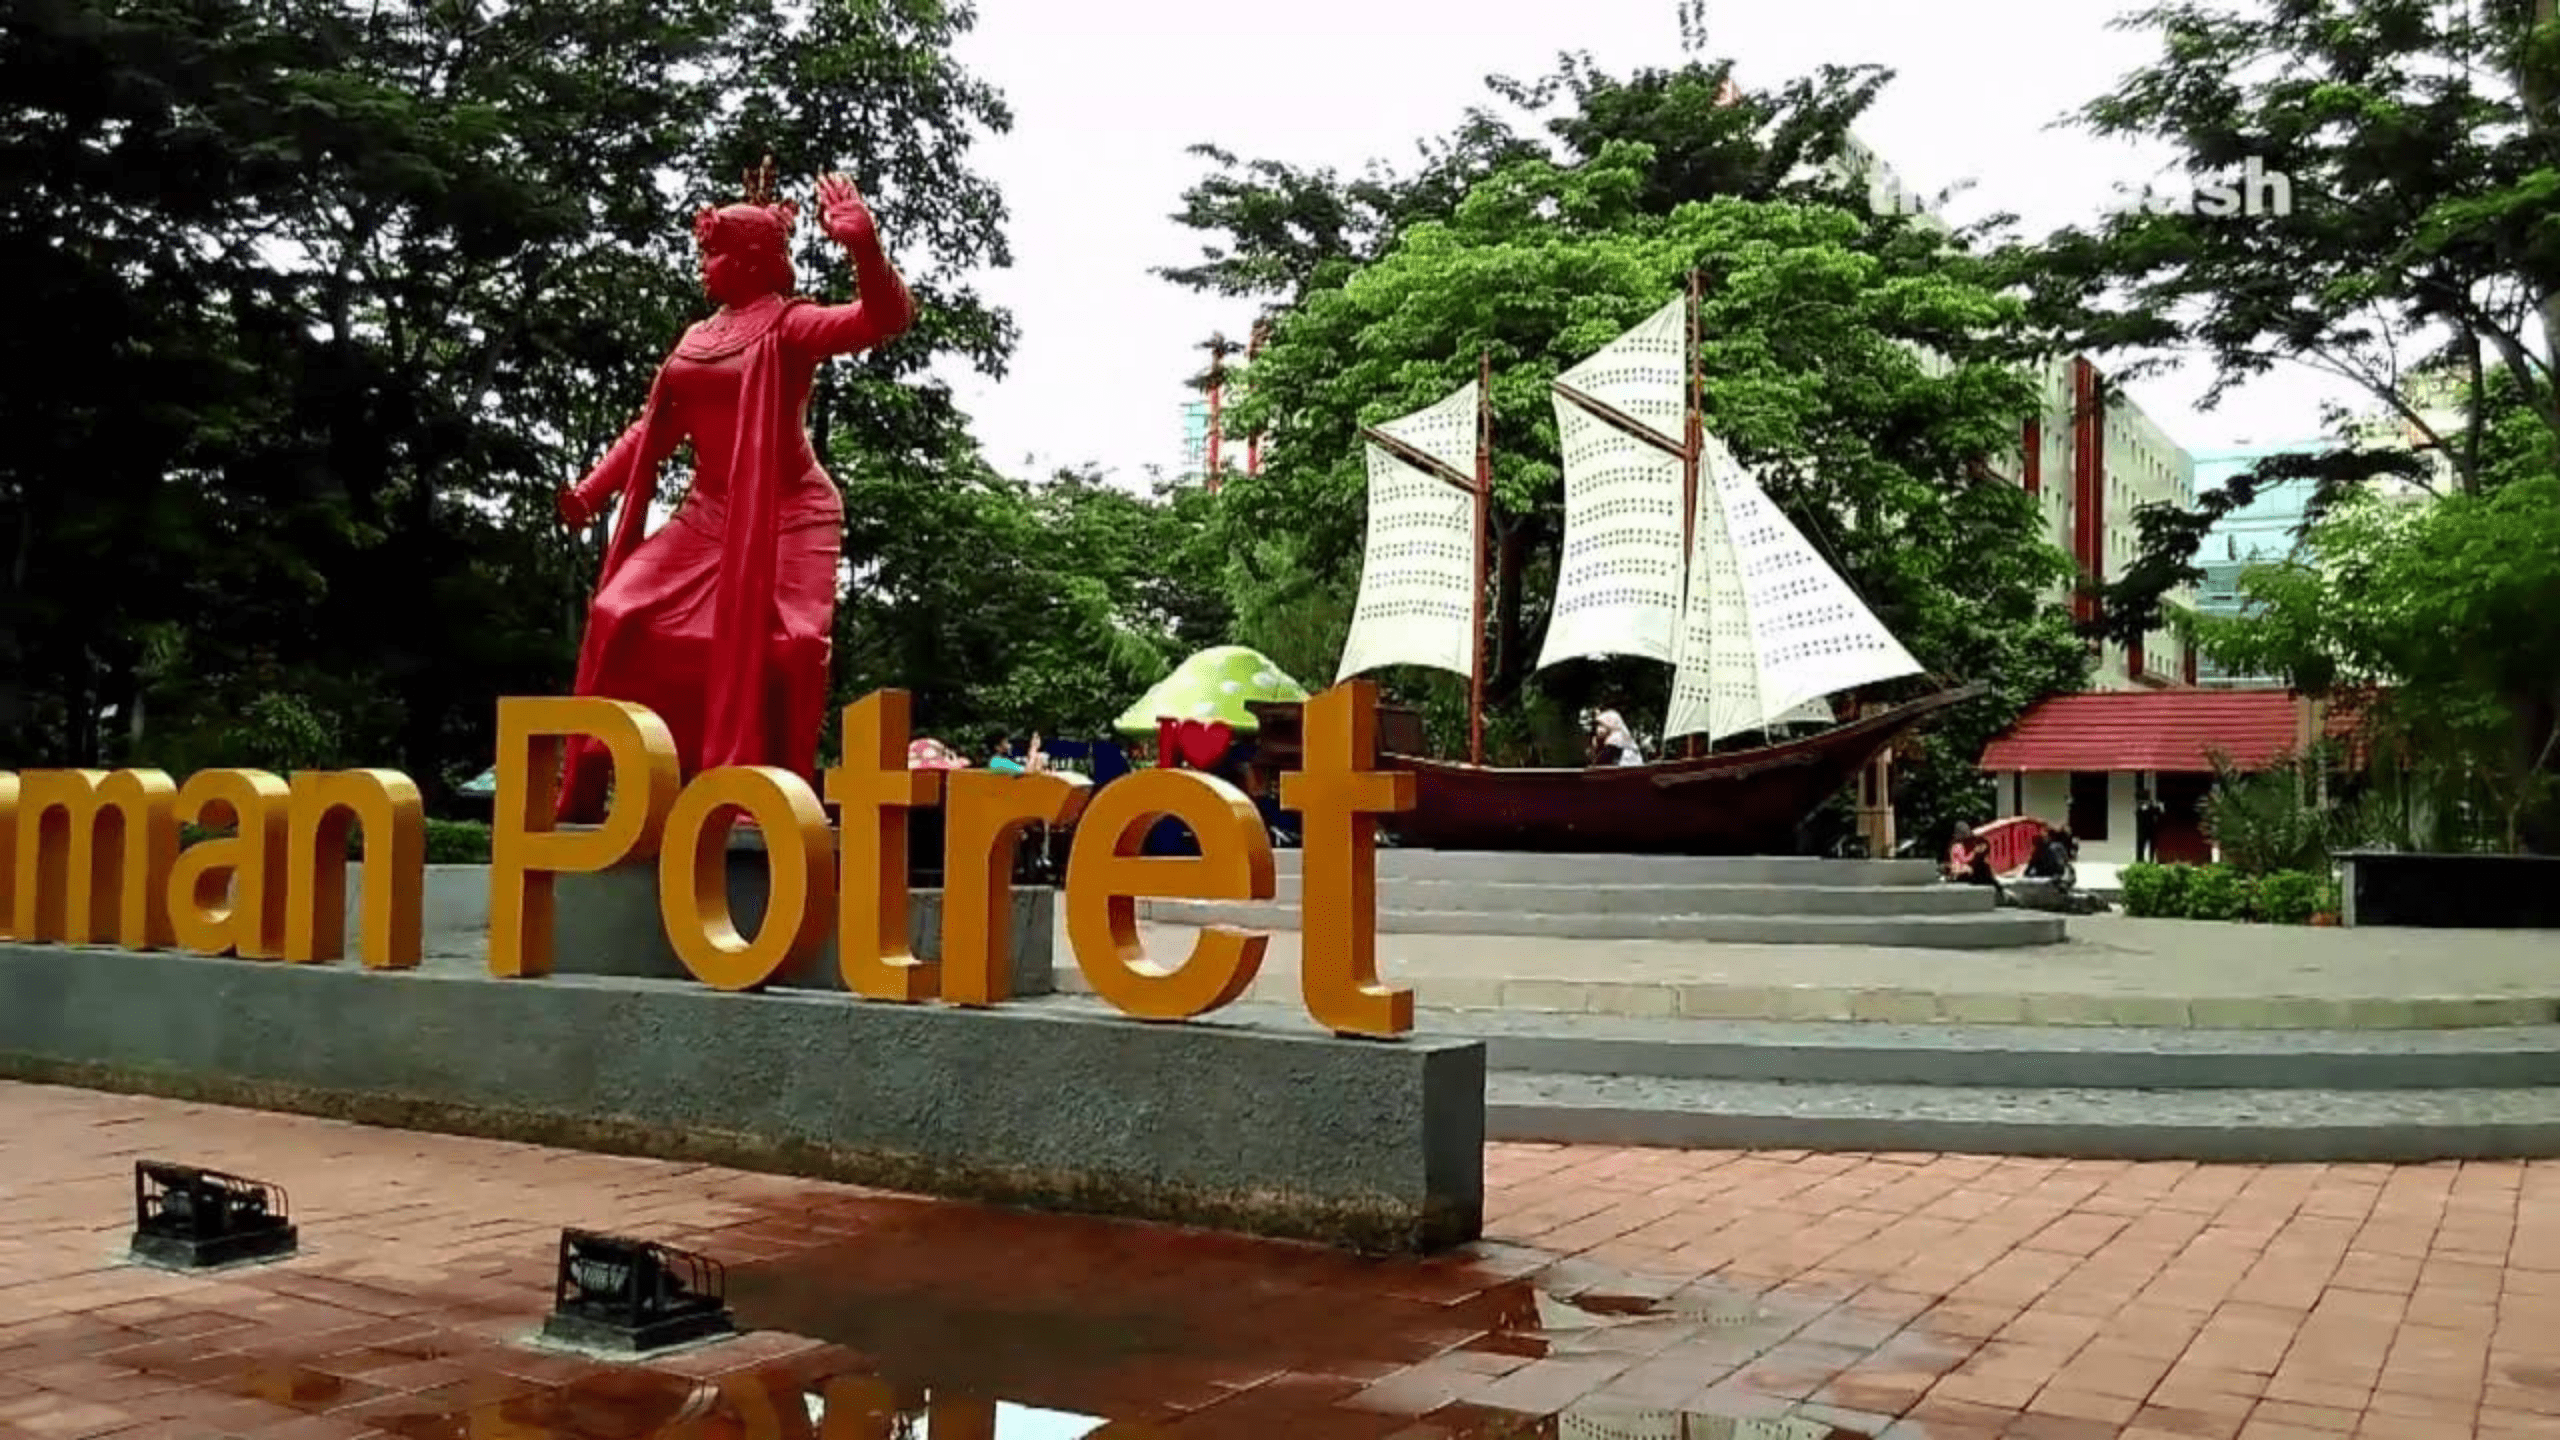 Taman Potret Iconic Garden at Tangerang City